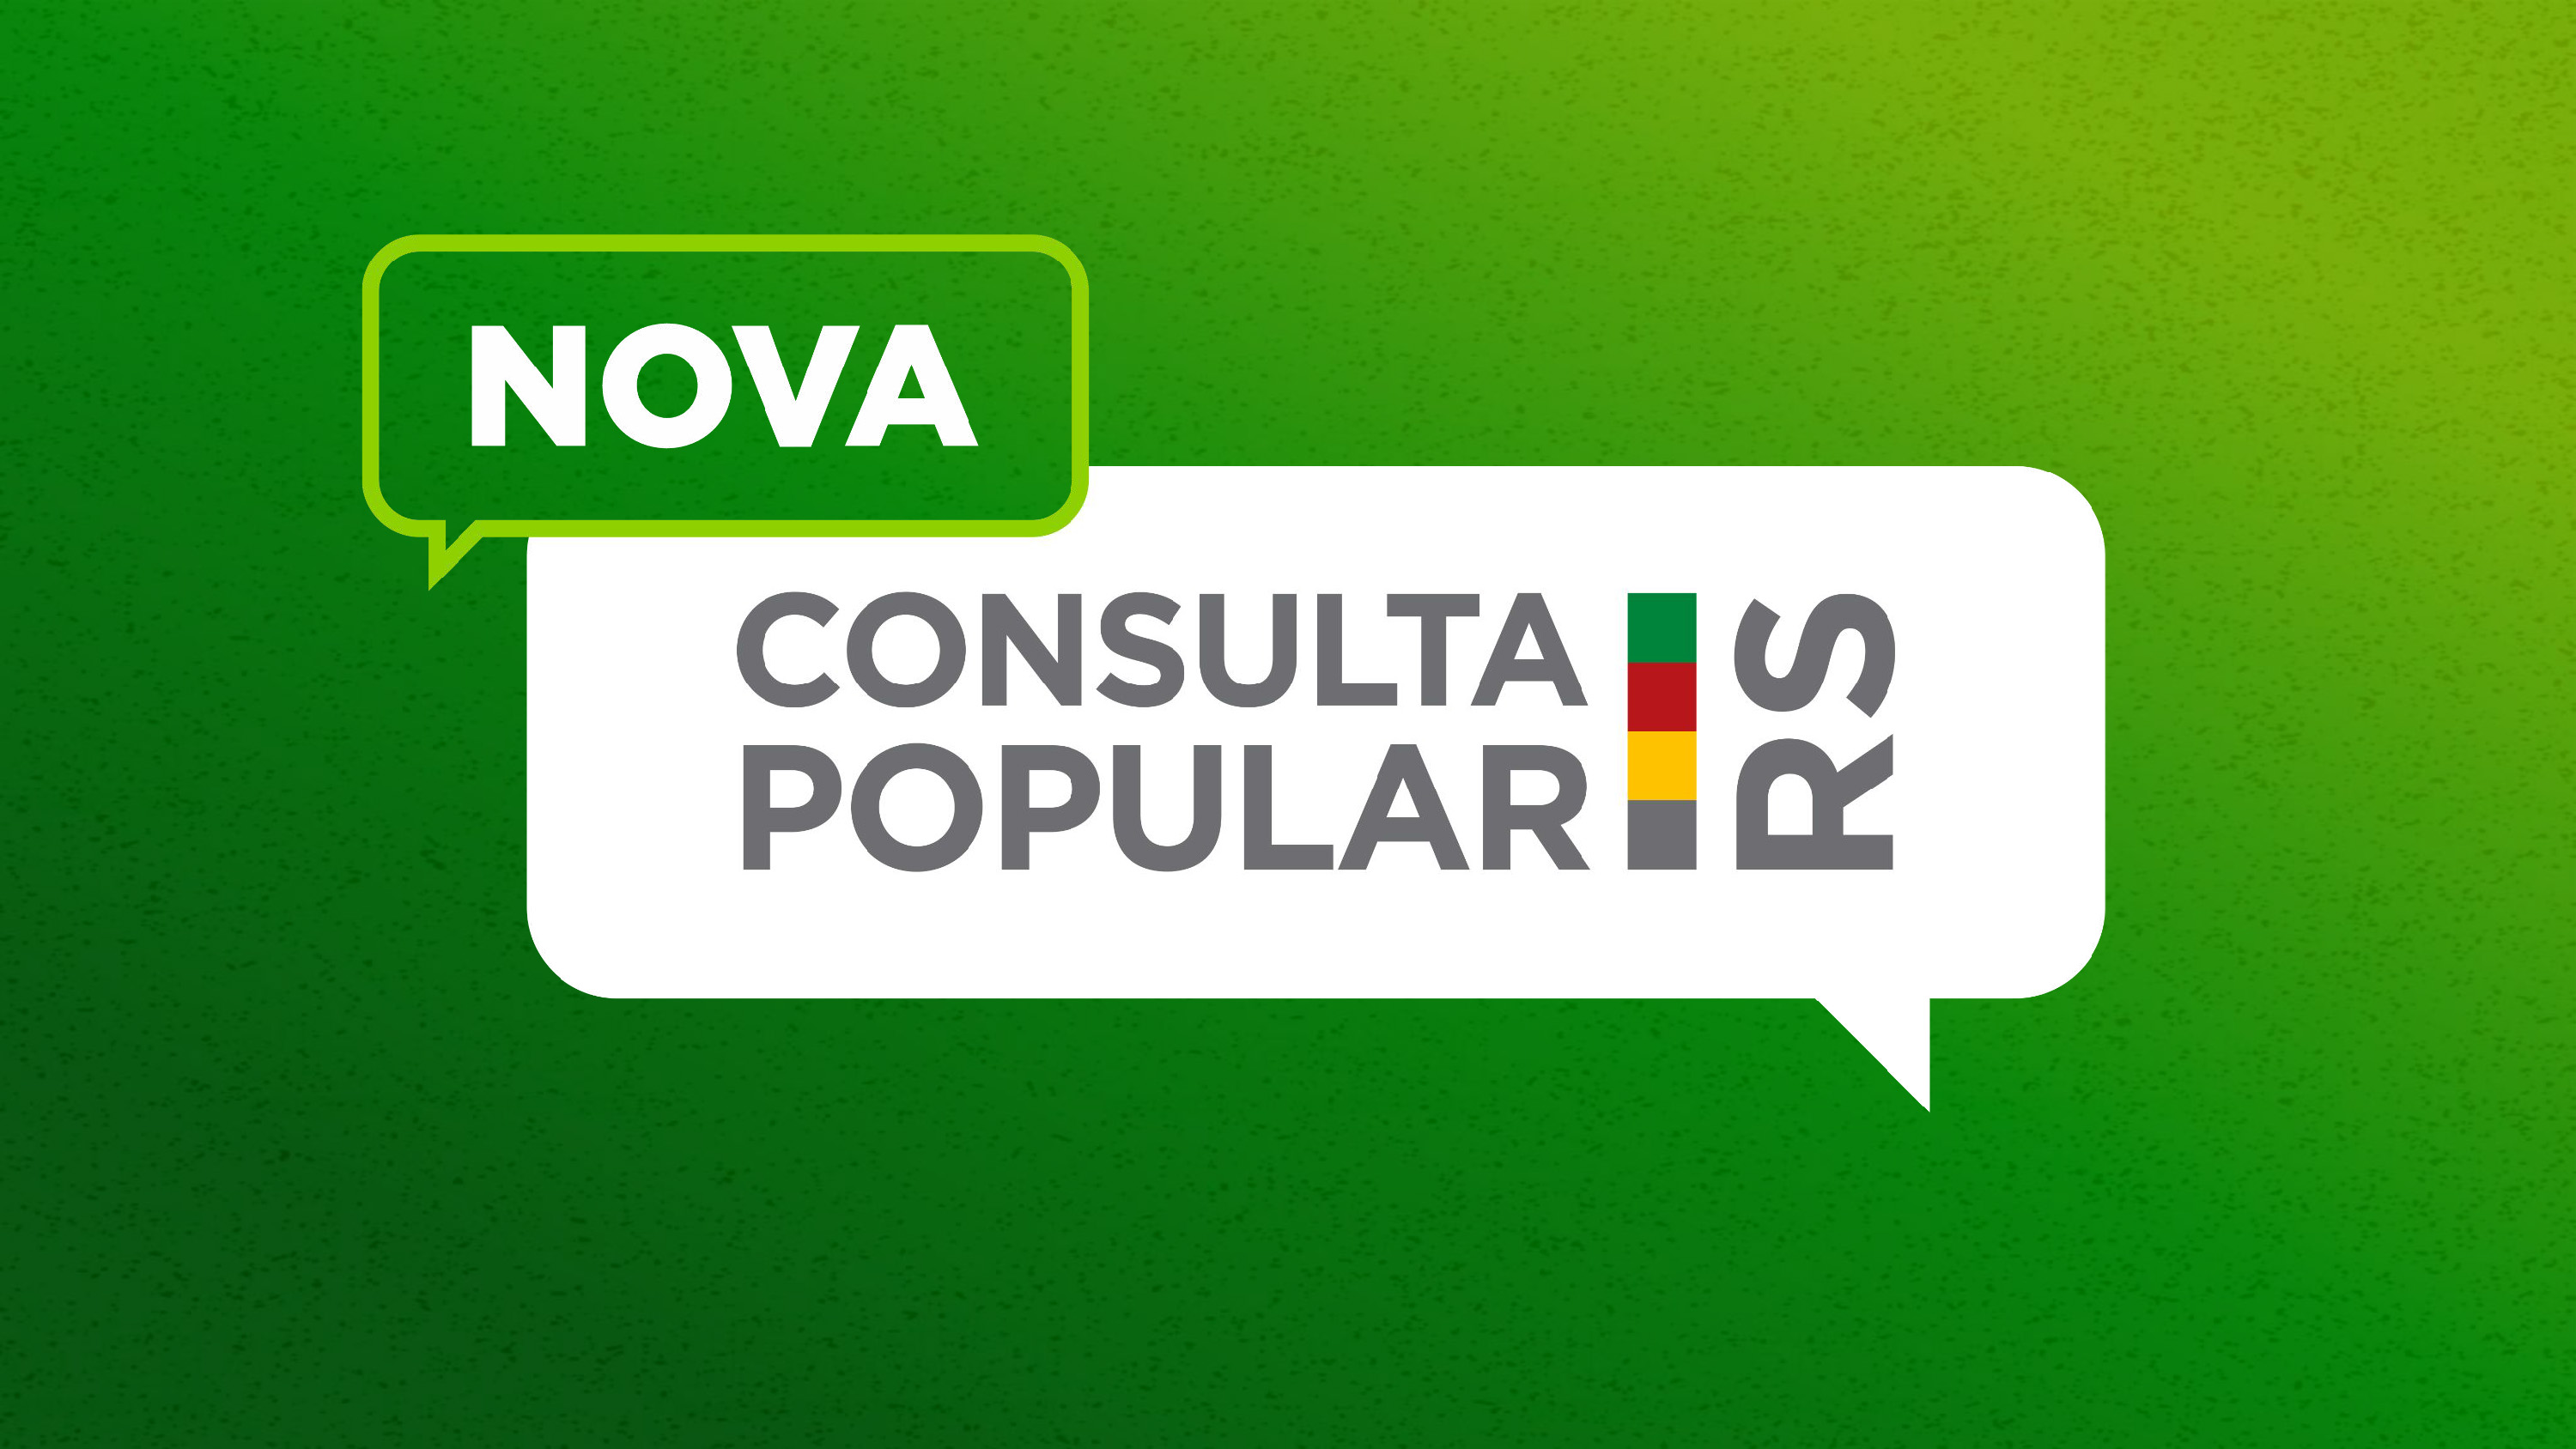 NOVA CONSULTA POPULAR-1